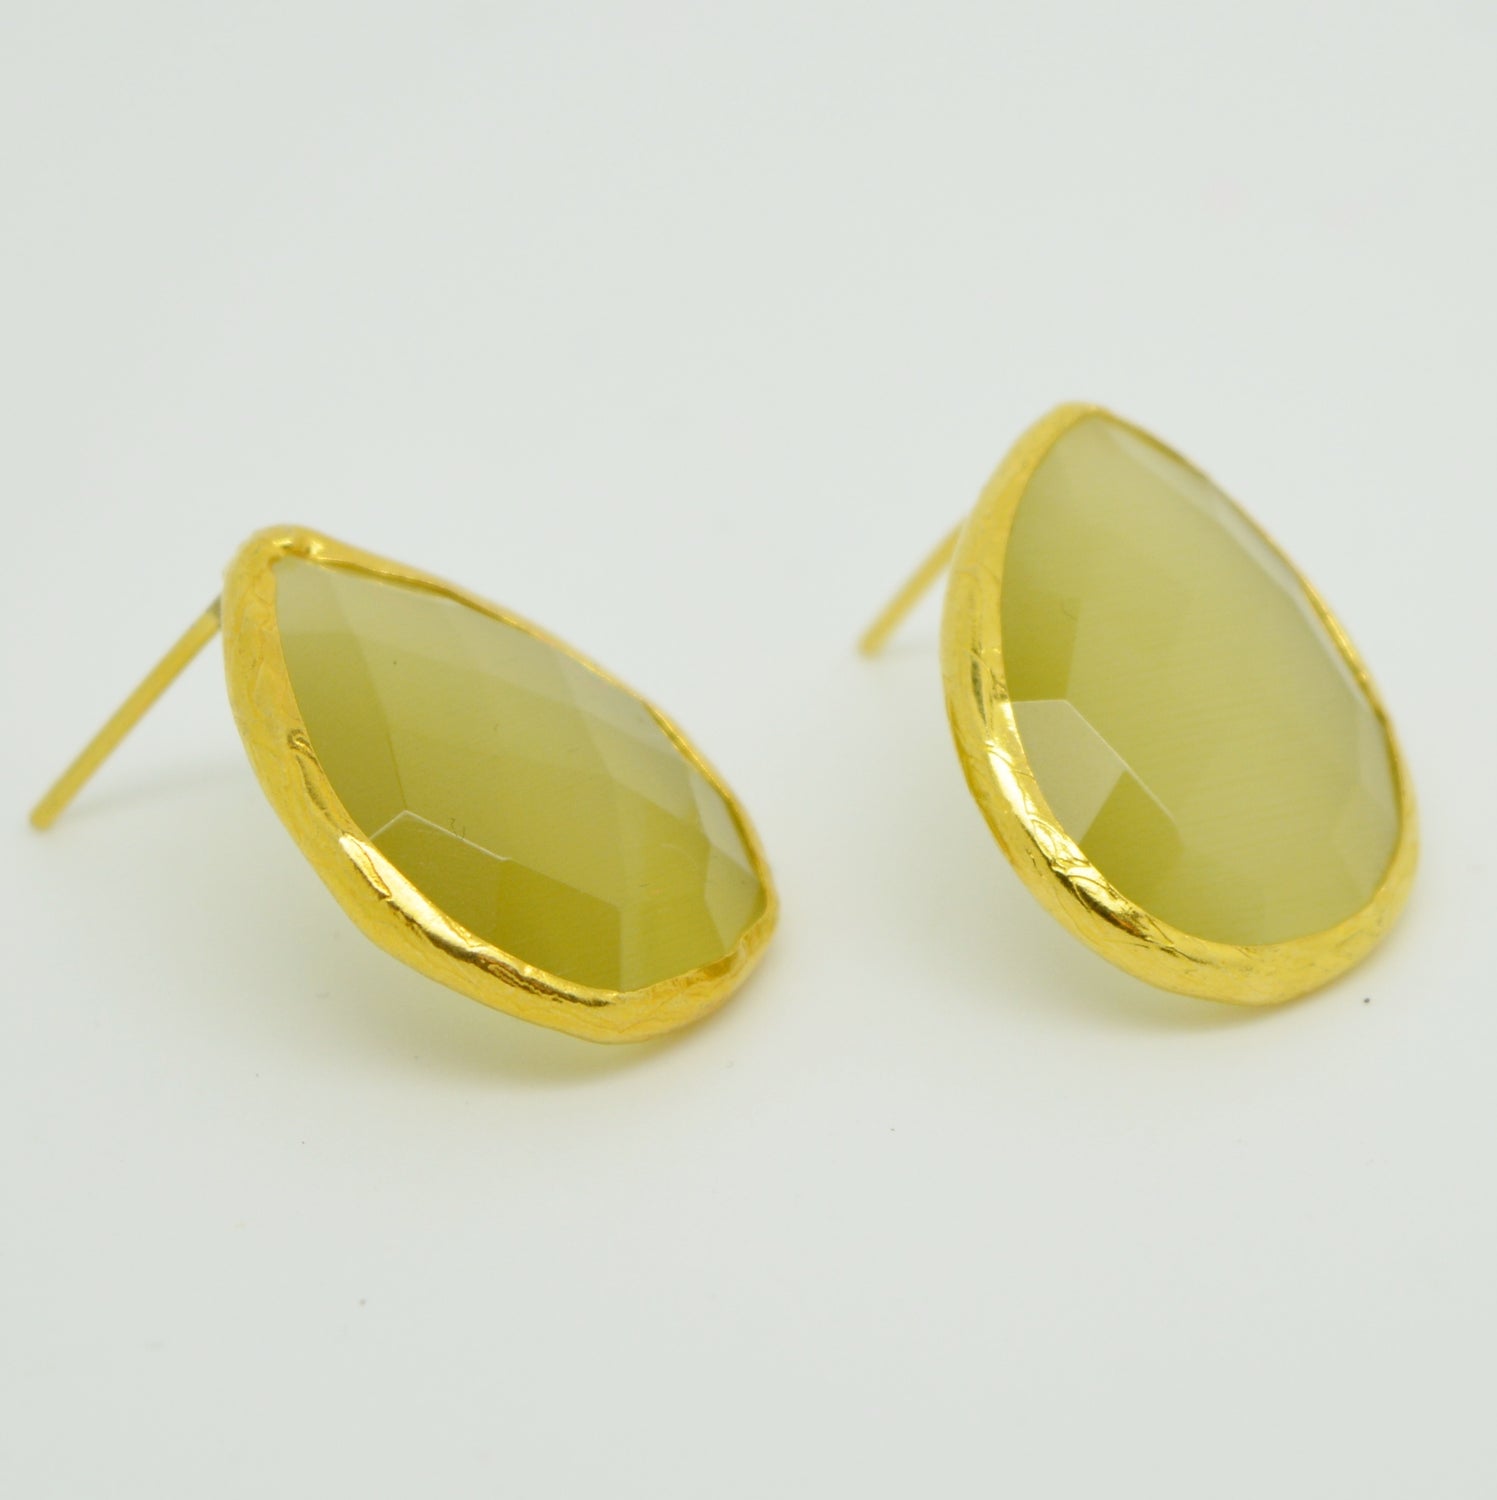 Aylas Cat eye studs earrings - 21ct Gold plated semi precious gemstone - Handmade in Ottoman Style by Artisan